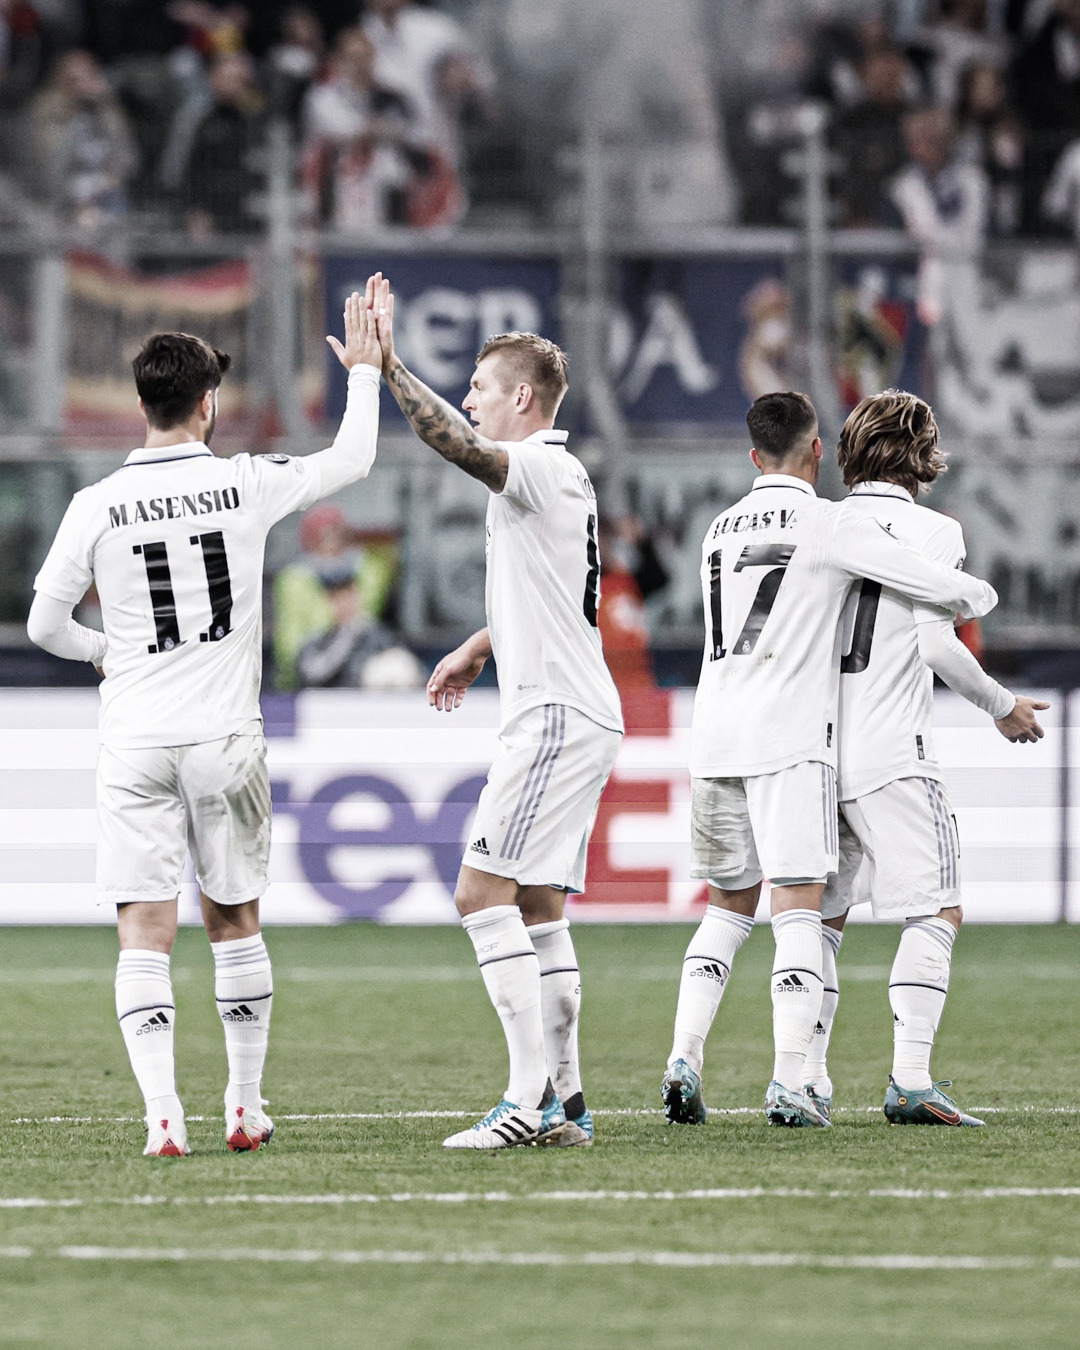 Shakhtar Donetsk - Real Madrid: puntuaciones del Real Madrid en la cuarta jornada de la fase de grupos de la Champions League